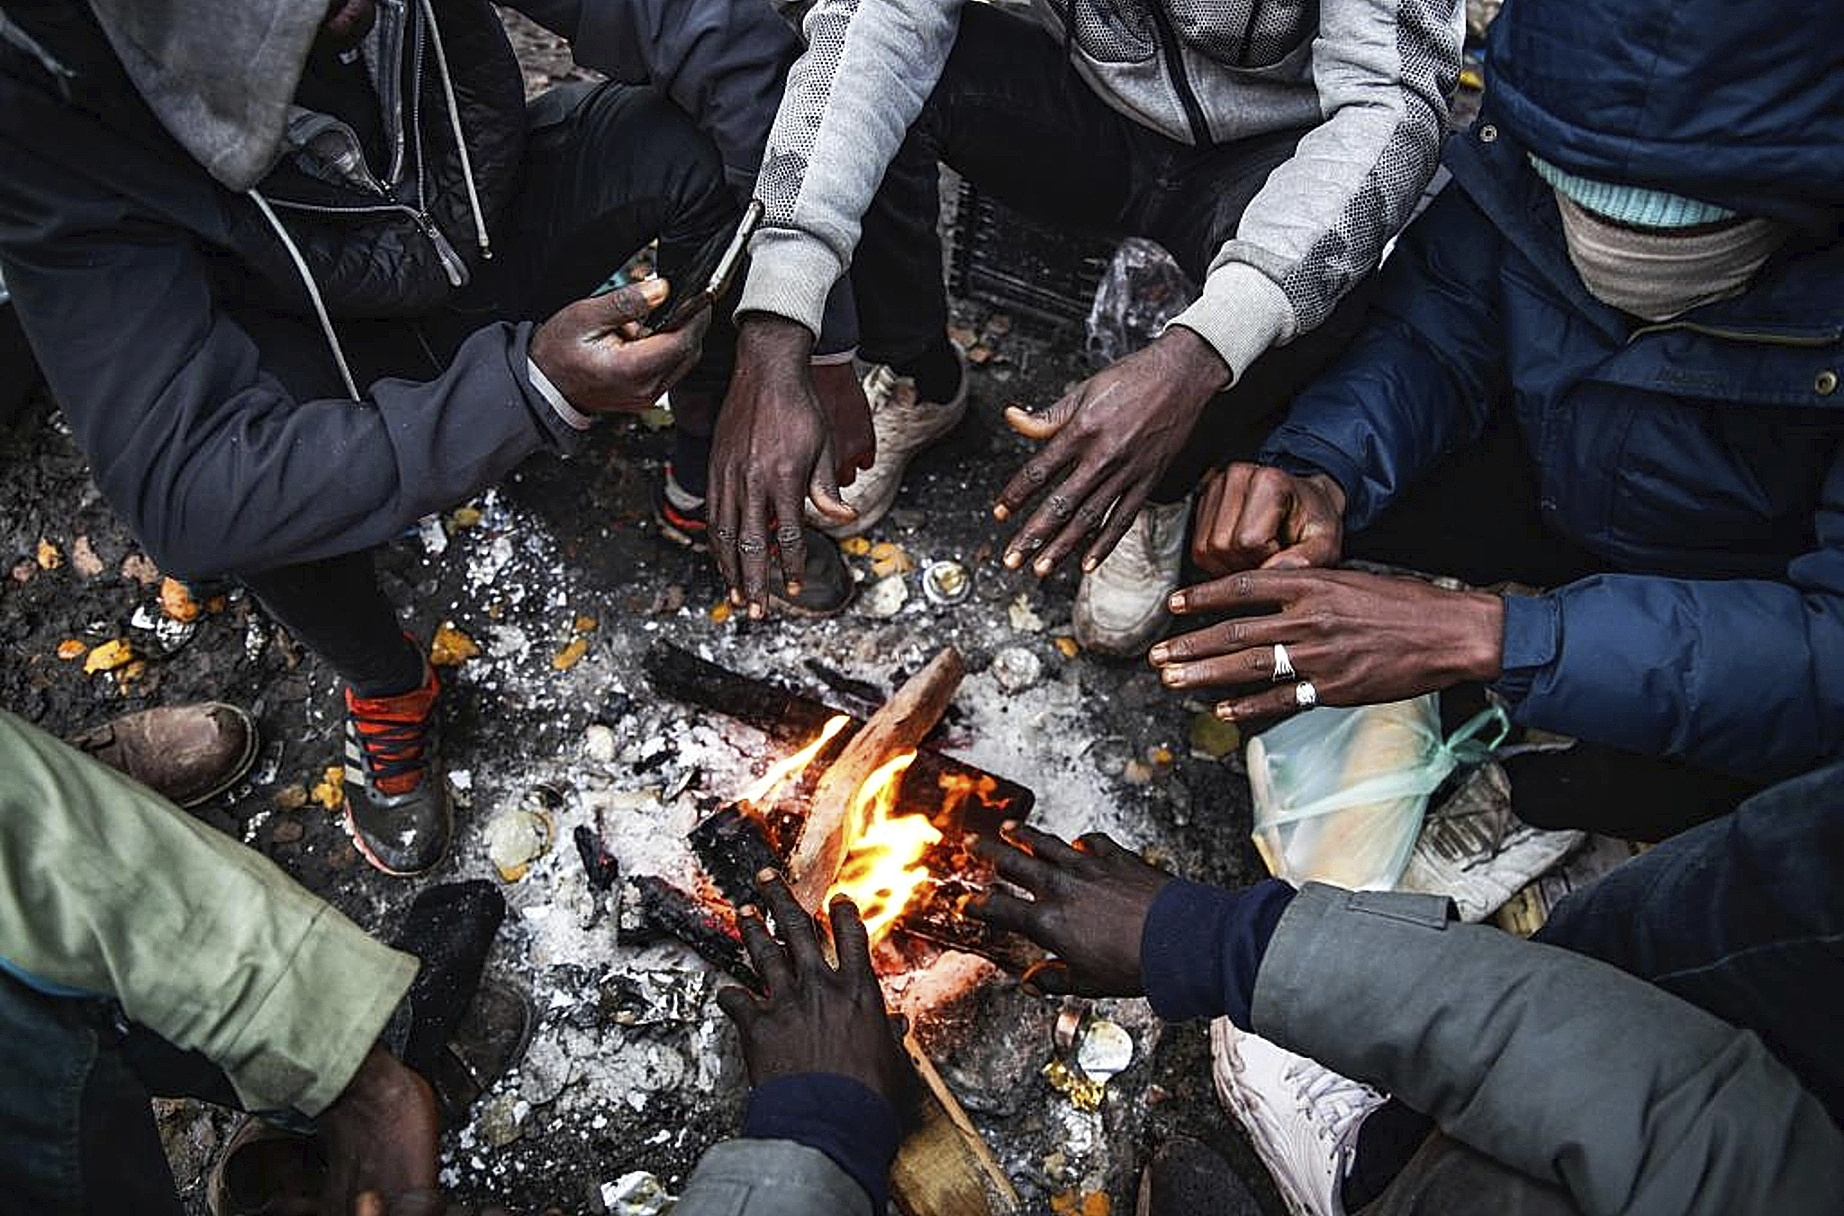 Un grupo de migrantes se calienta frente a una hoguera en Calais.